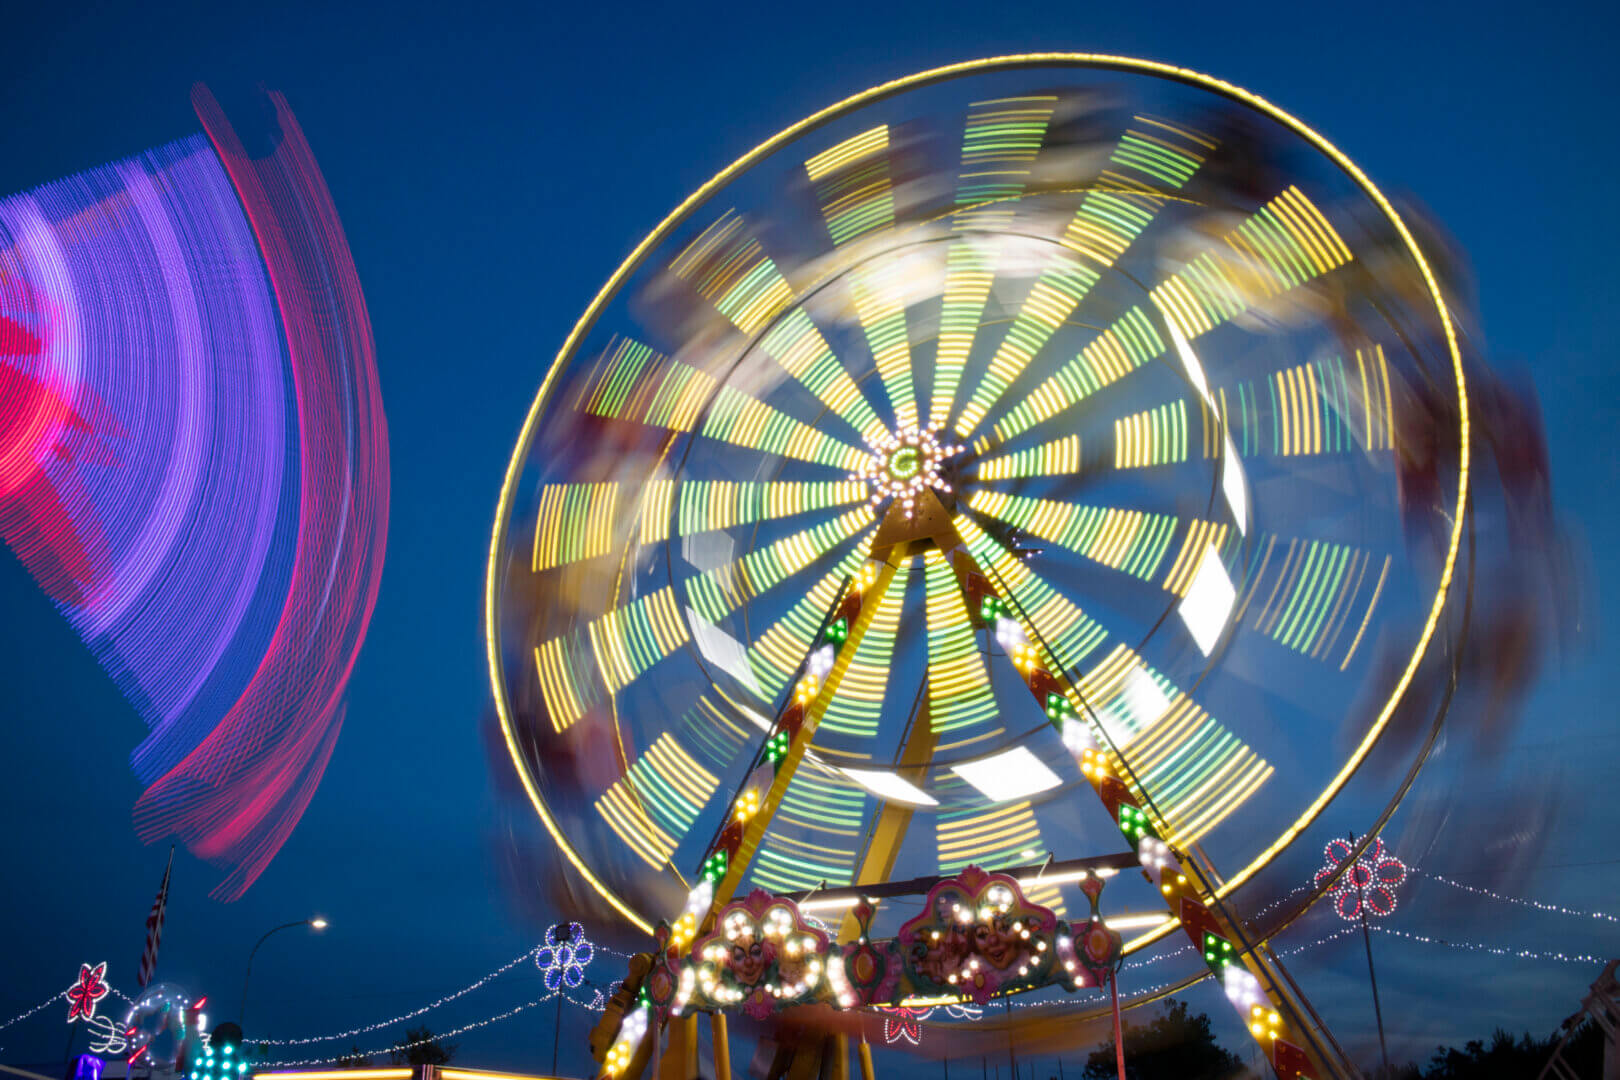 Photographic documentation of a Ferris wheel inside an amusement park